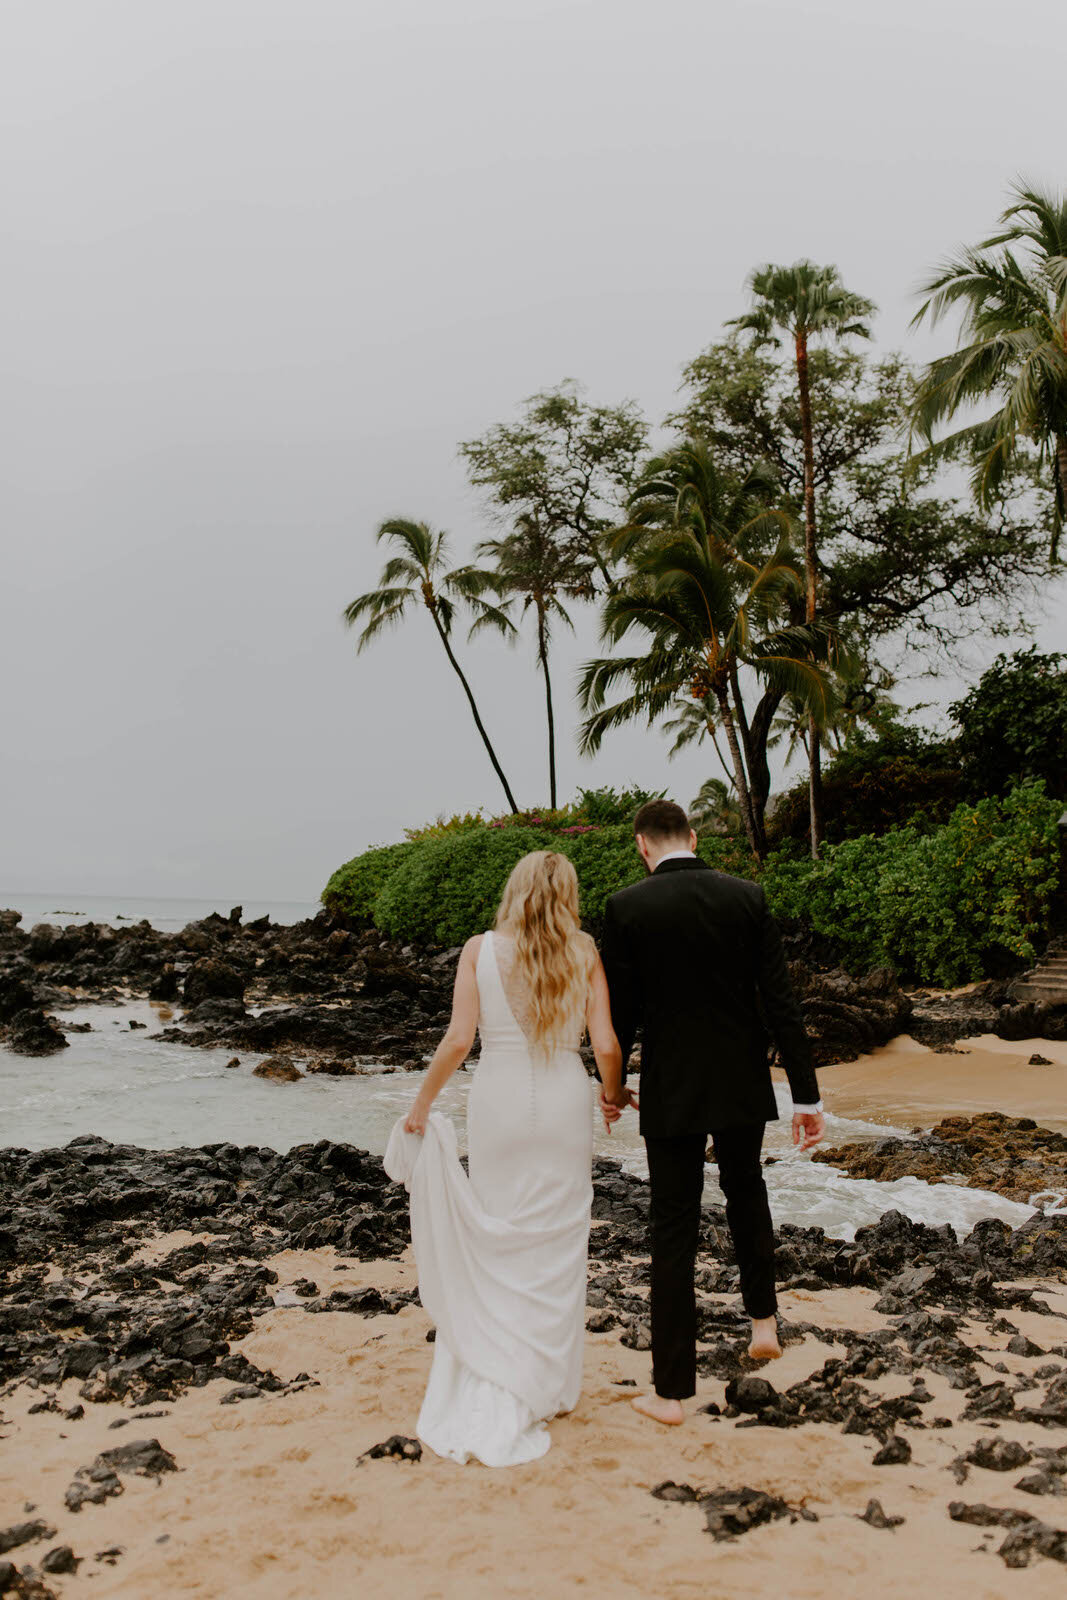 Brianna-Broyles-Photography-Fairmont-Kea-Lani-Wedding-Maui-Photographer-53.jpg